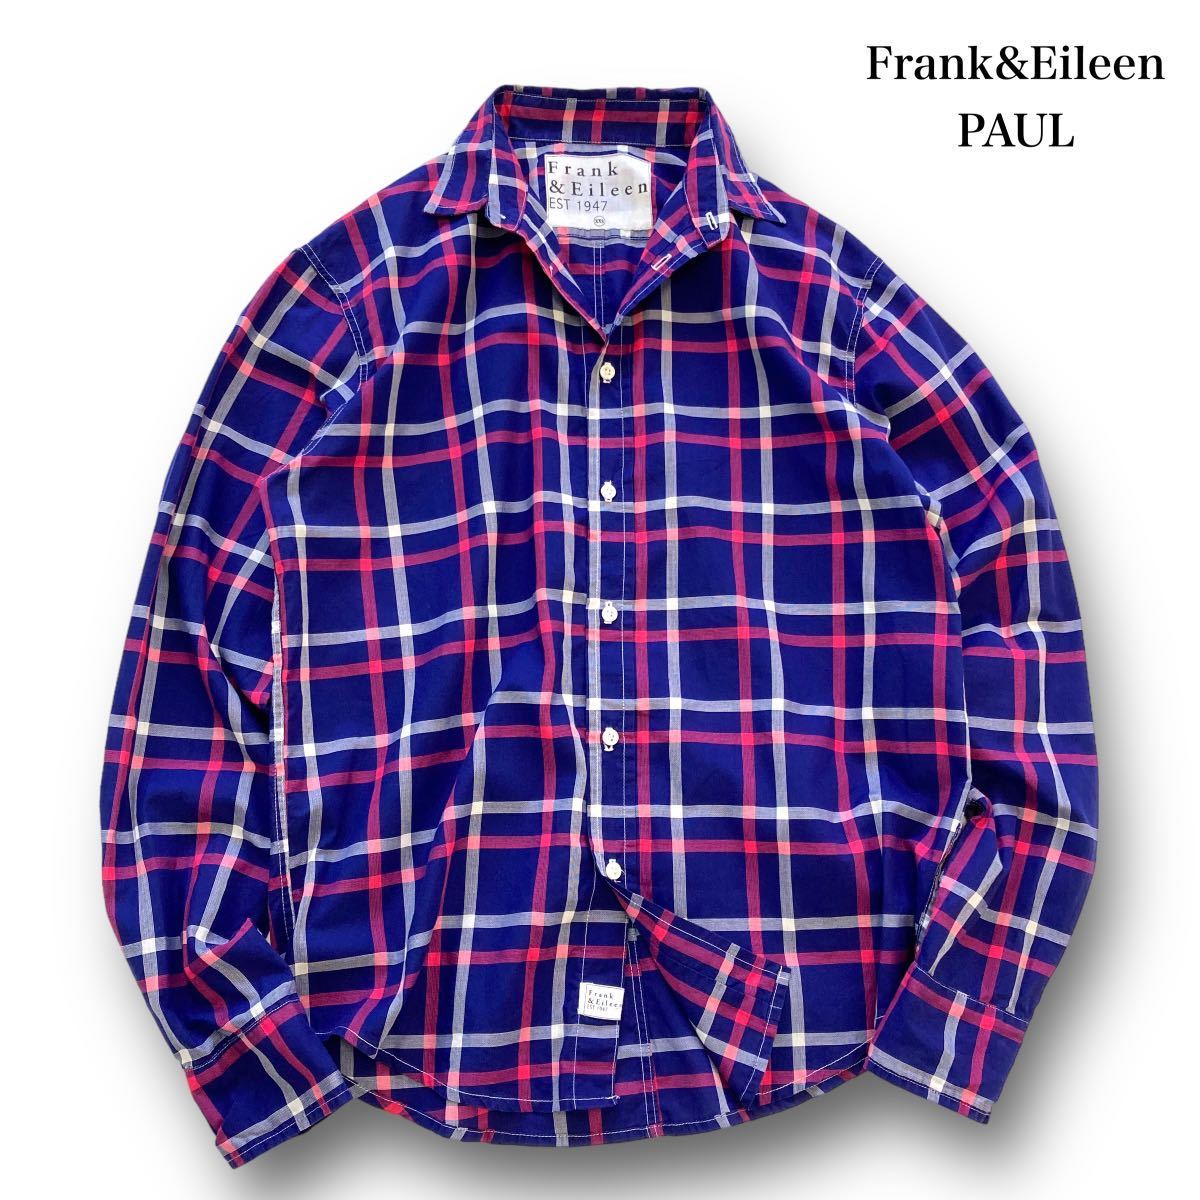 【Frank&Eileen】フランクアンドアイリーン PAUL スキッパーシャツ チェック長袖 USA製 ボタンダウンシャツ チェックシャツ 長袖シャツ